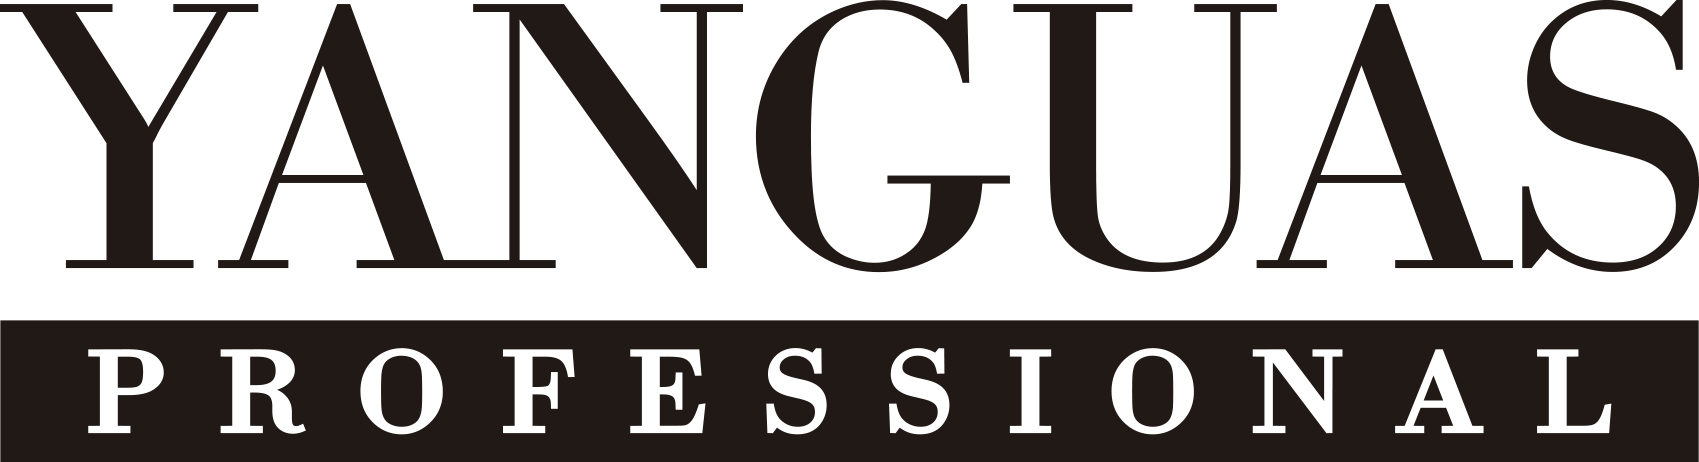 YANGUAS PROFESSIONAL logo 2014